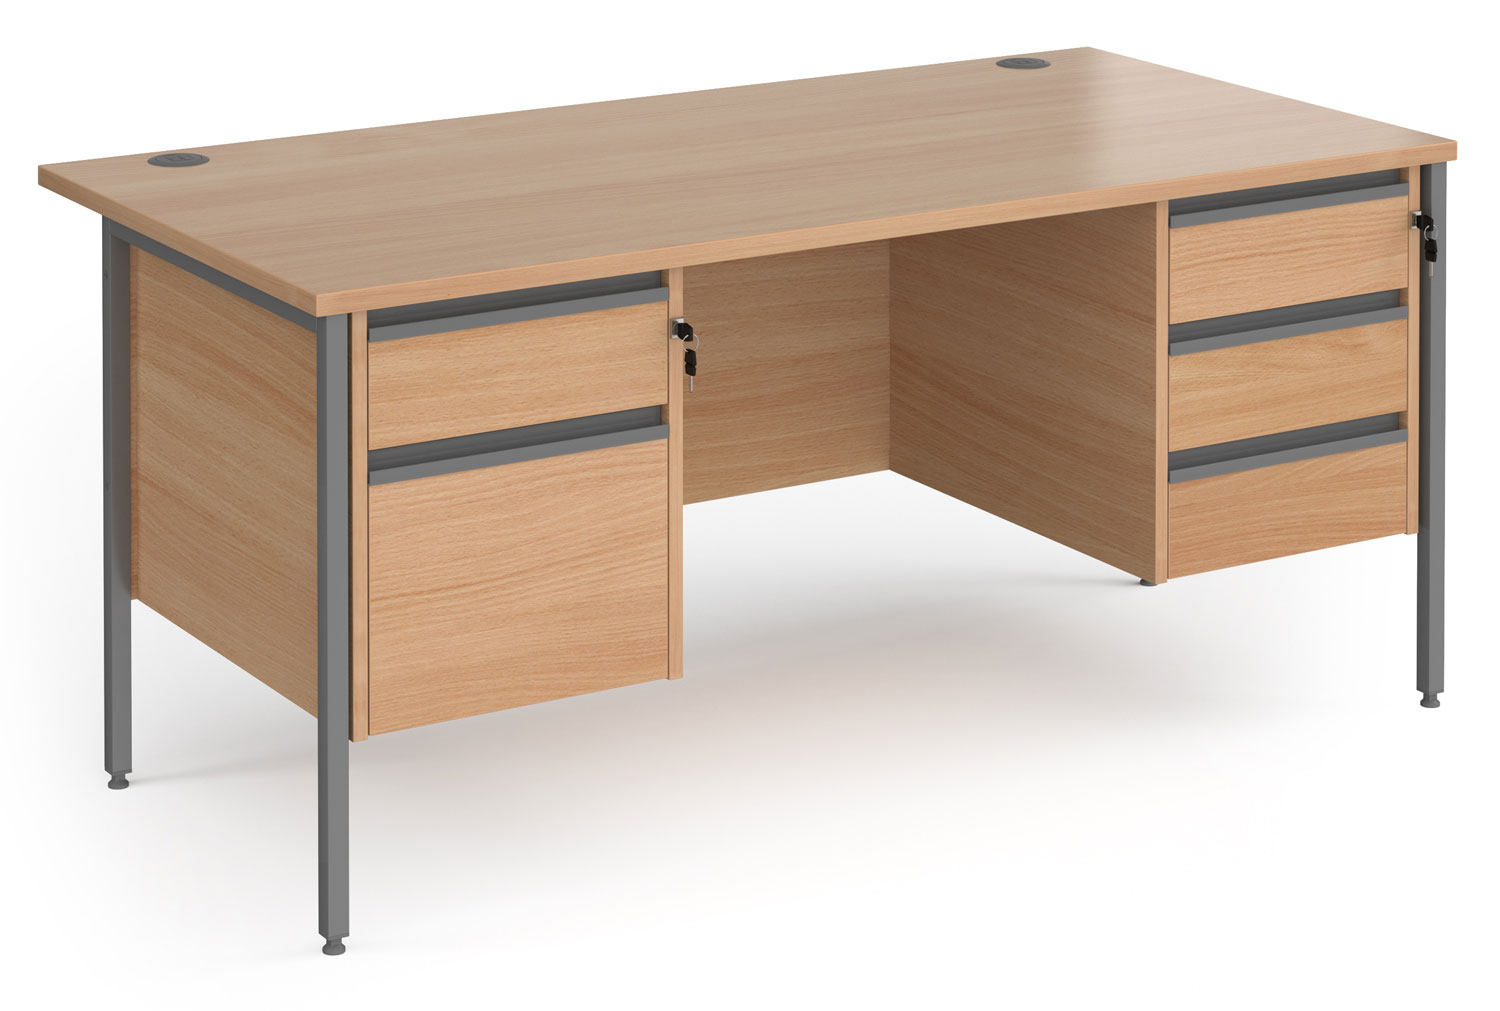 Value Line Classic+ Rectangular H-Leg Office Desk 2+3 Drawers (Graphite Leg), 160wx80dx73h (cm), Beech, Express Delivery